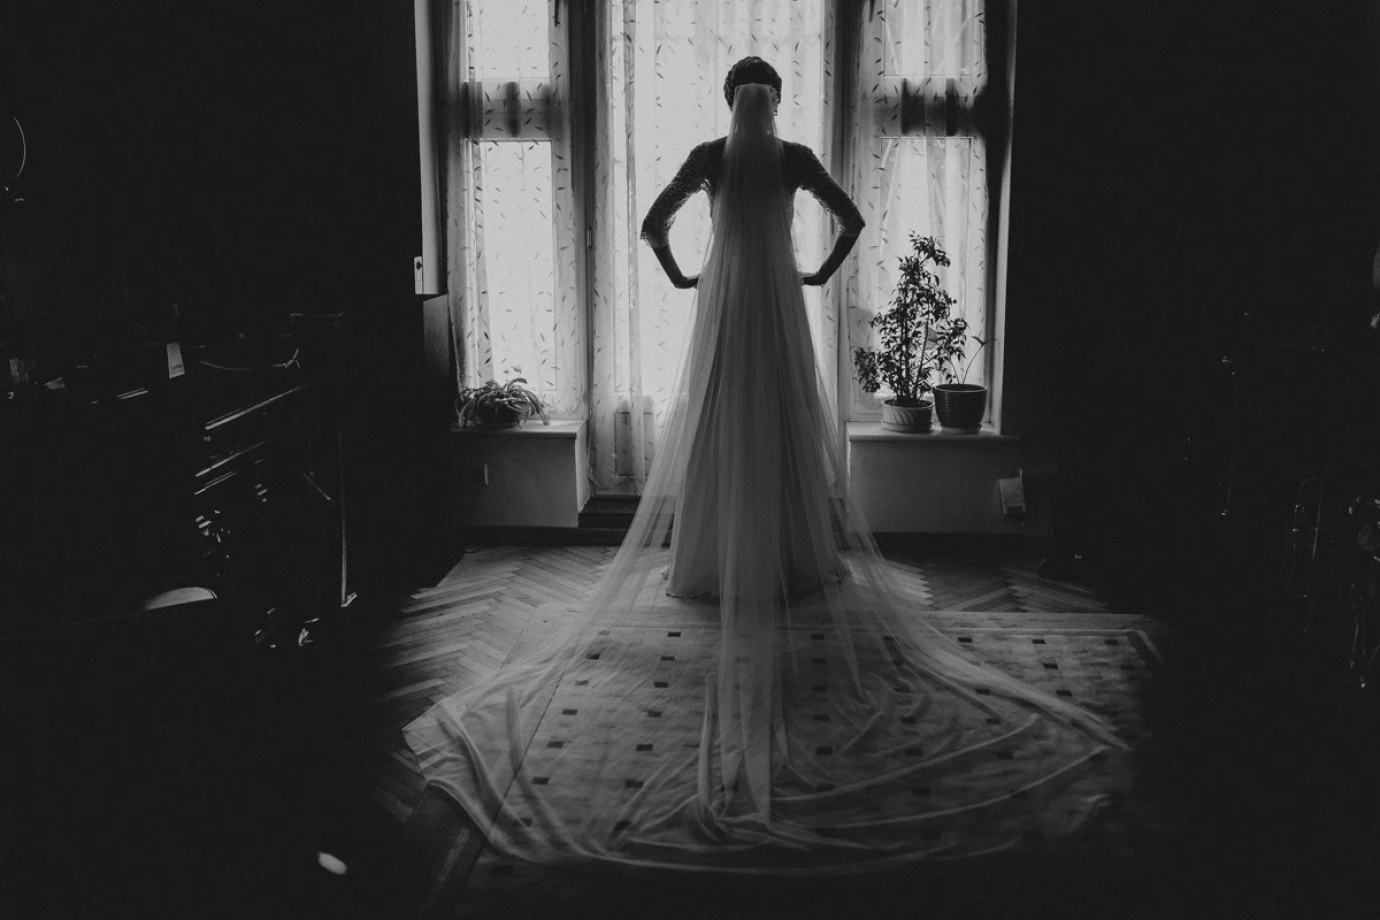 fotograf gdansk kwiecien-plecien-studio portfolio zdjecia slubne inspiracje wesele plener slubny sesja slubna